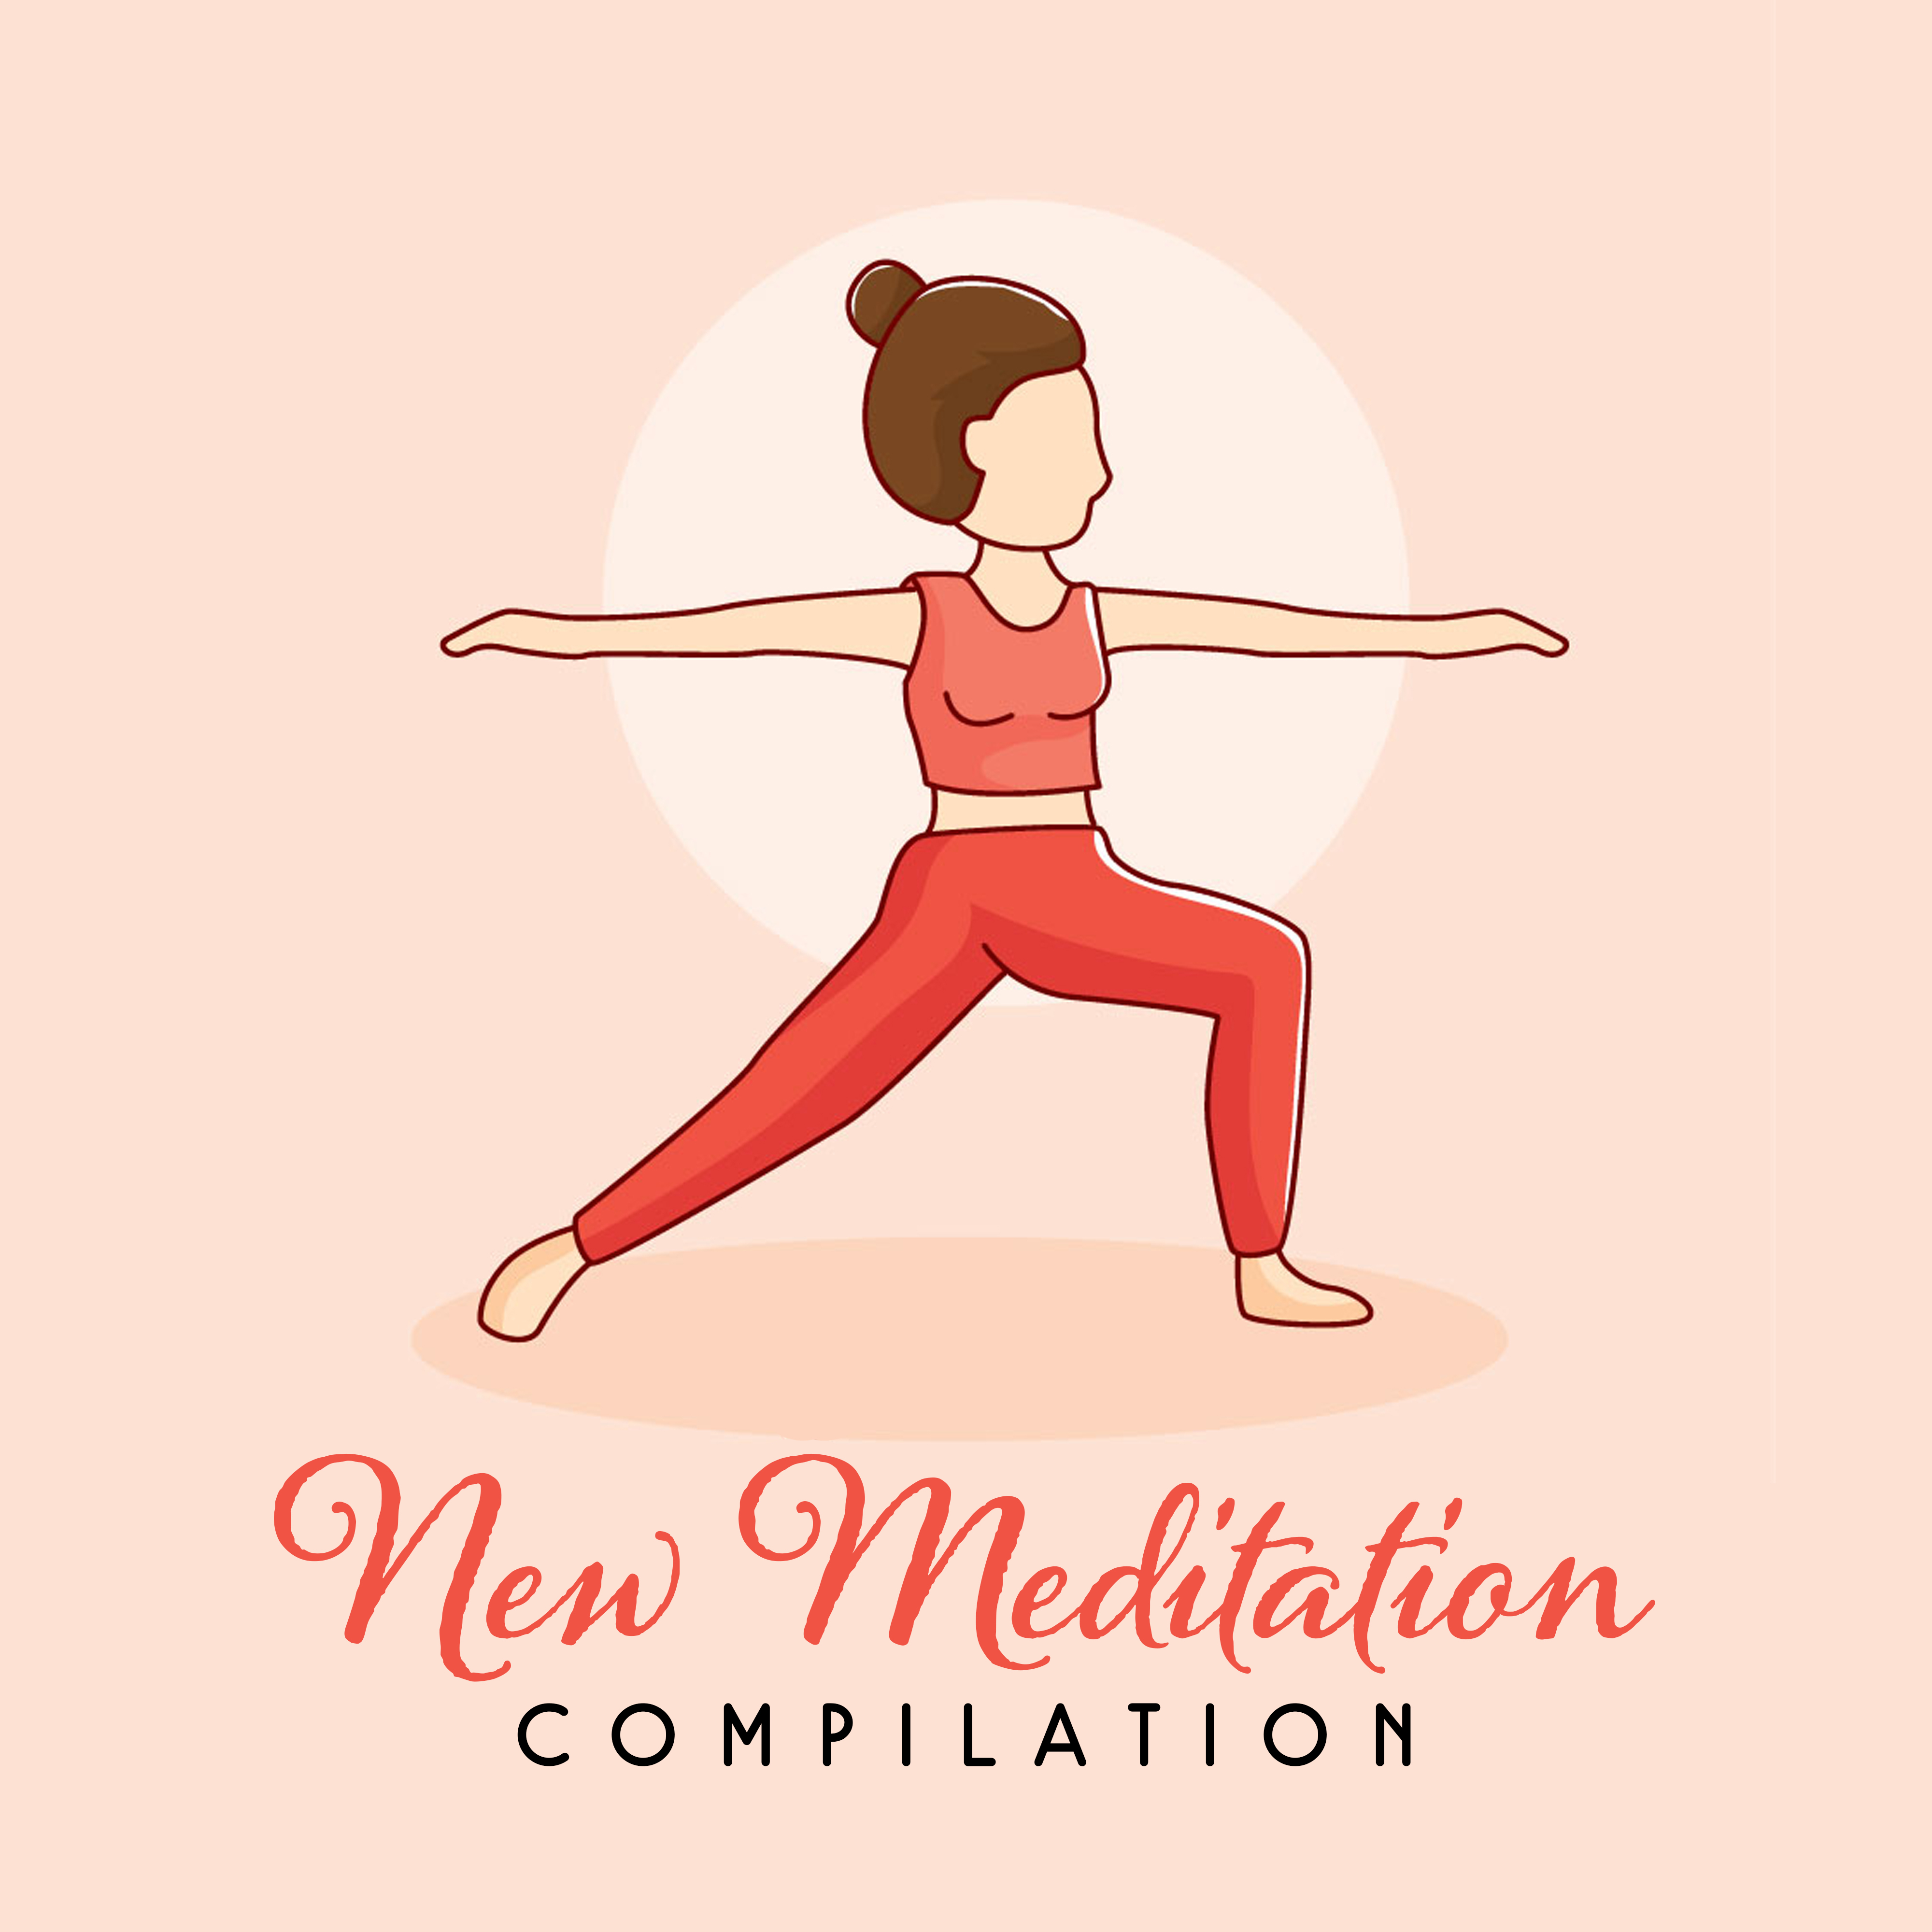 New Meditation Compilation